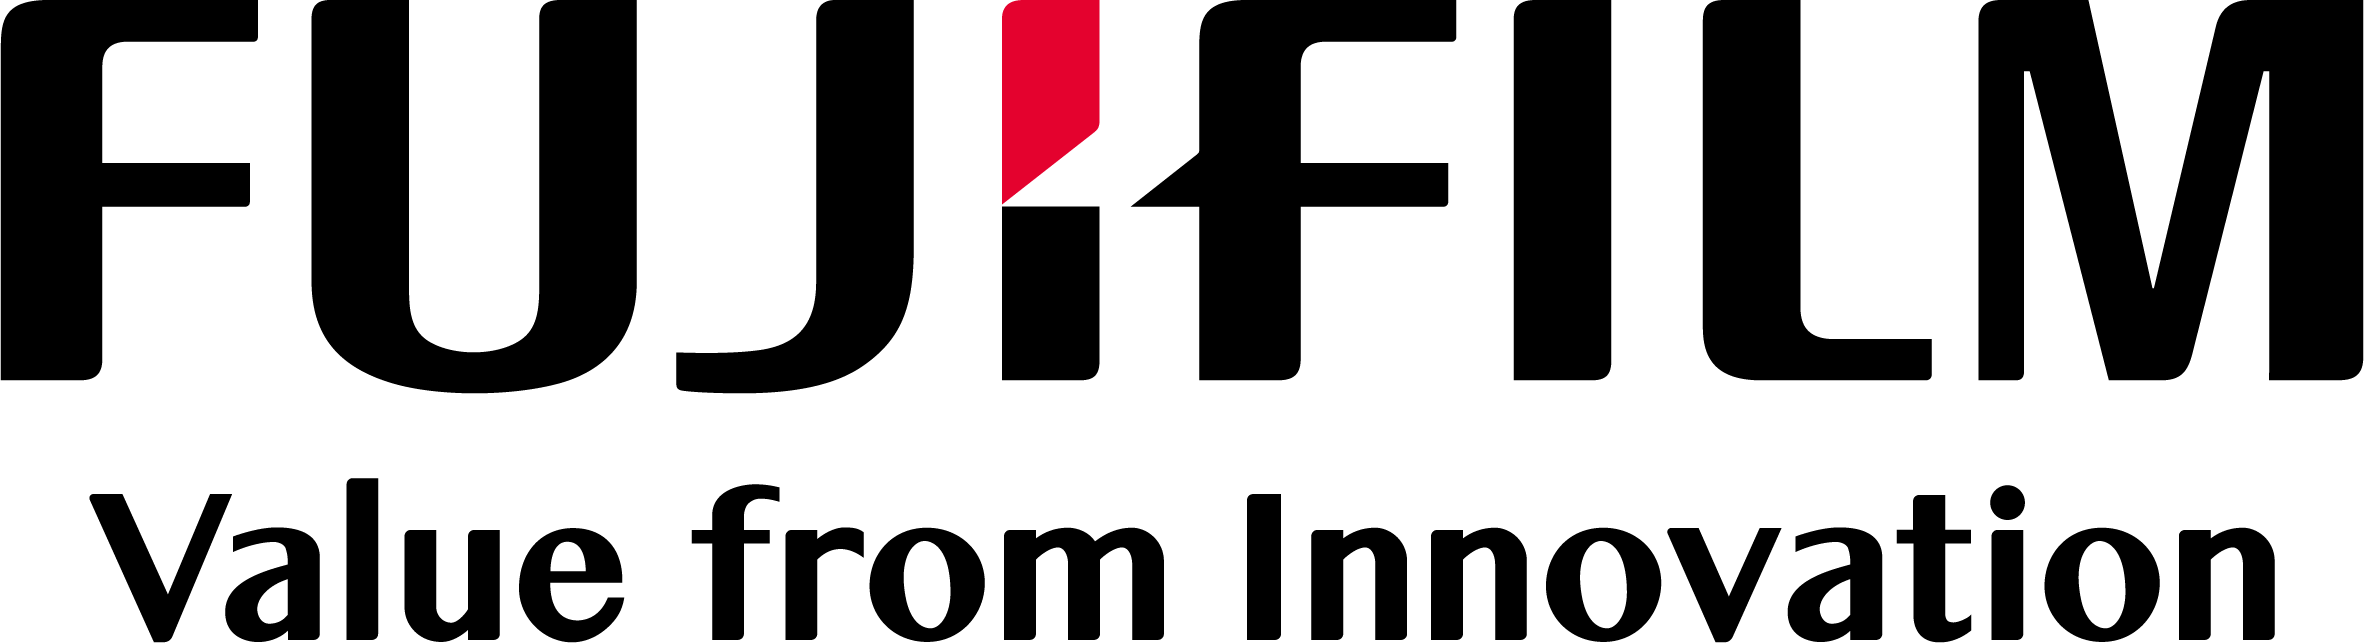 Fujifilm Banner Logo